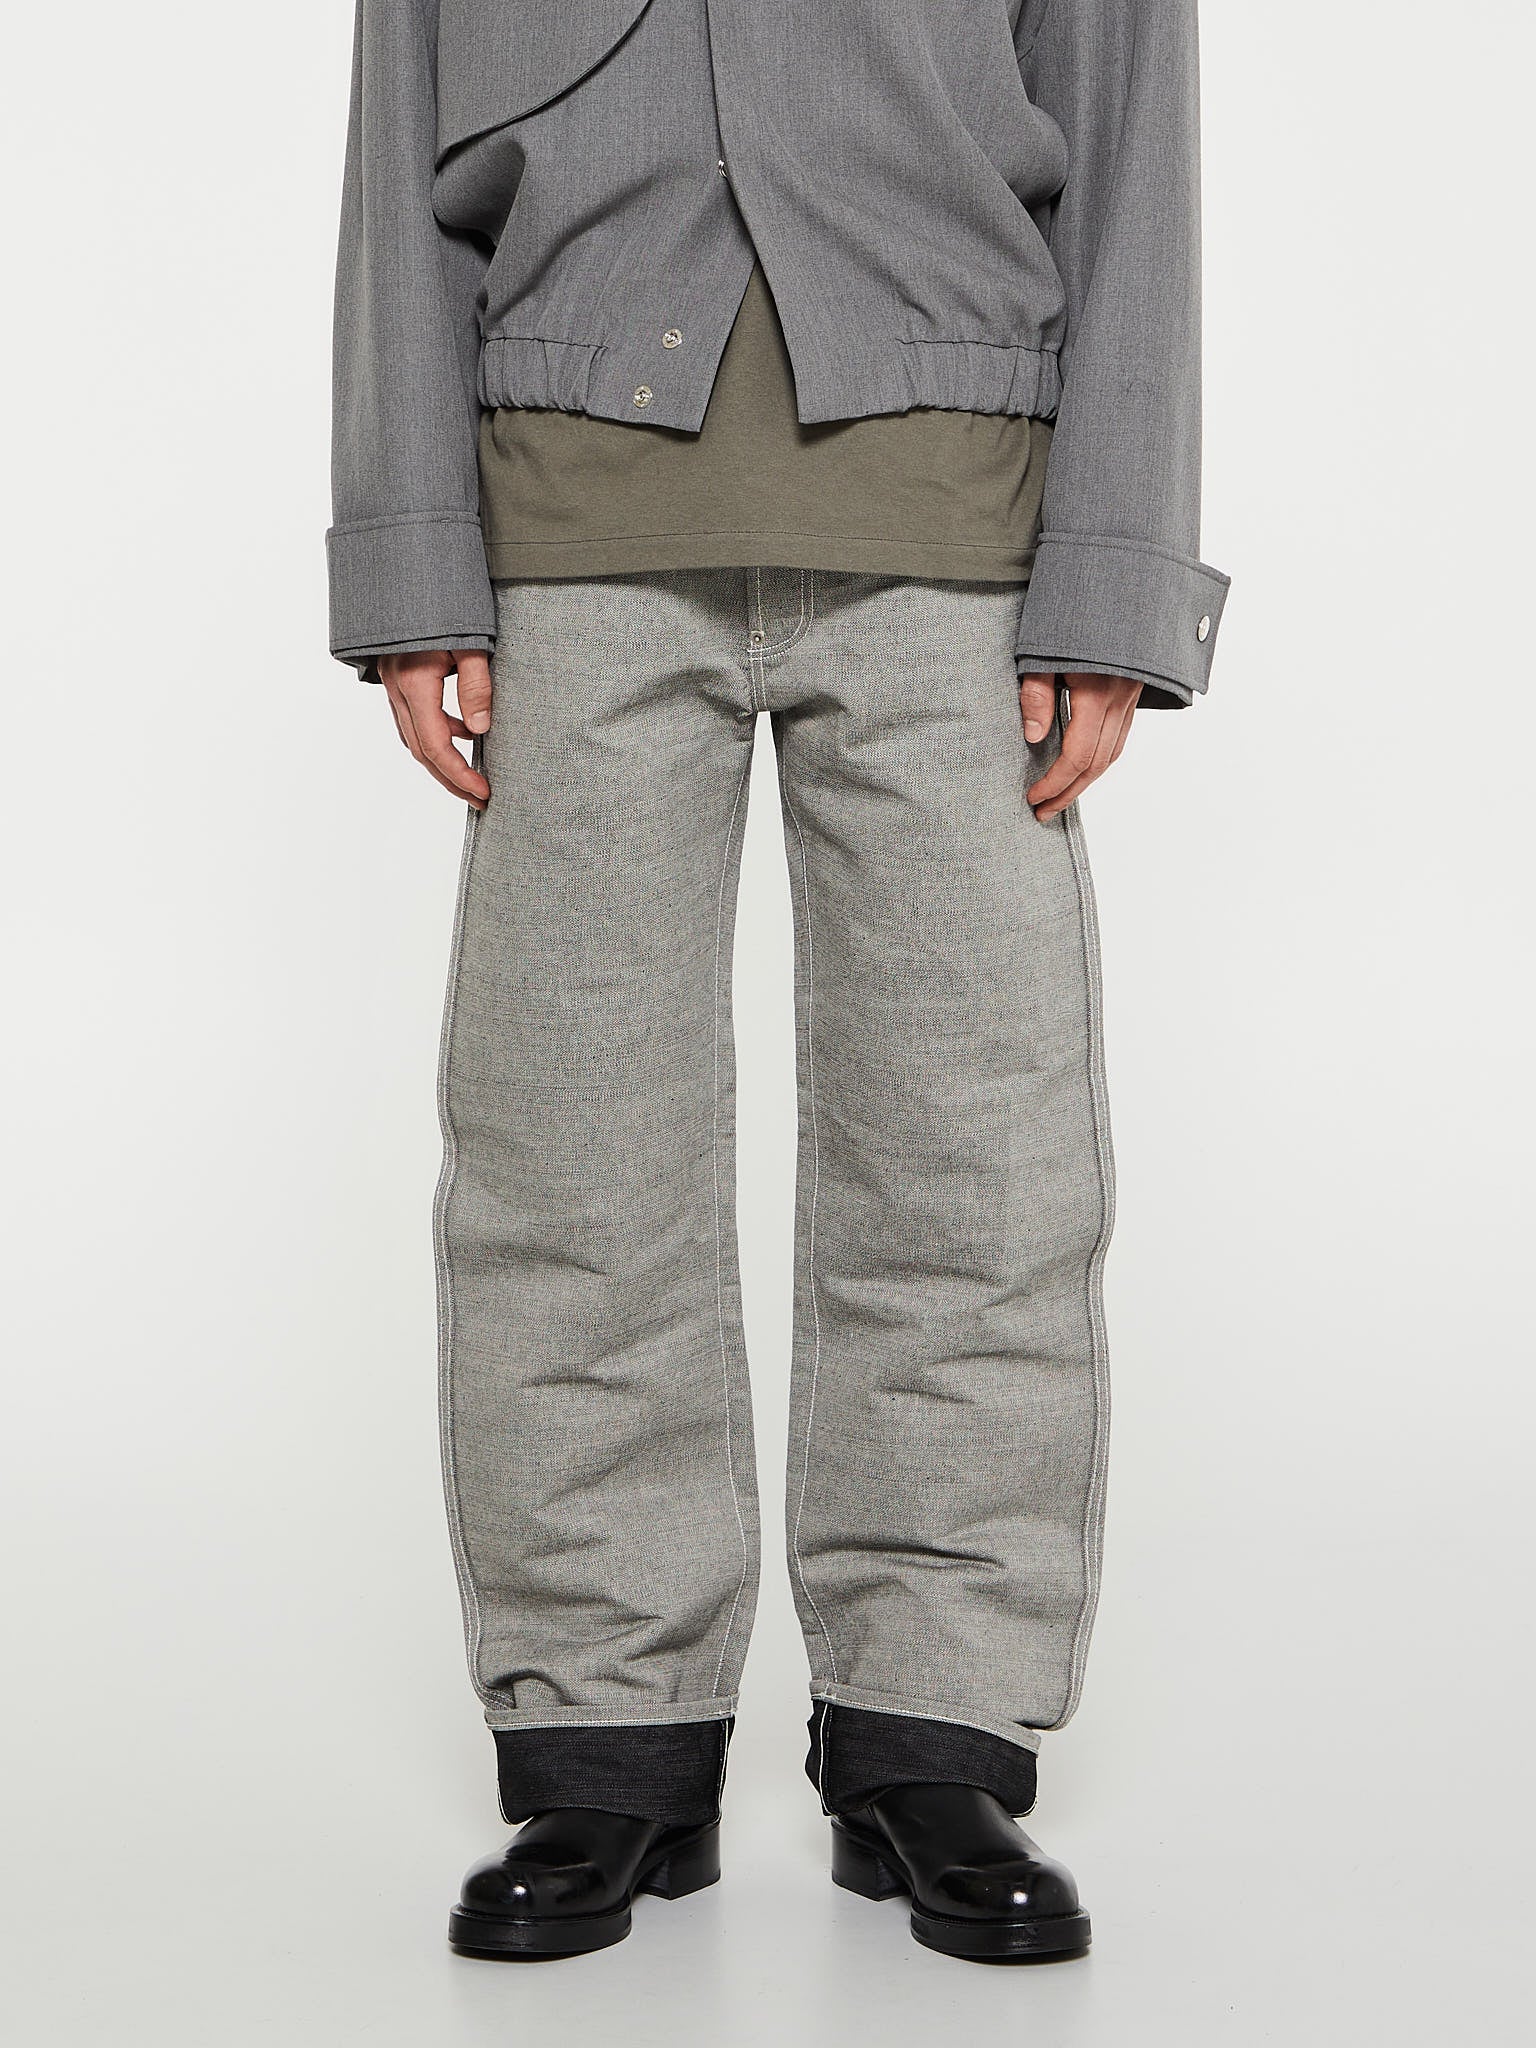 Maison Margiela - 5 Pockets Pants in Light Grey